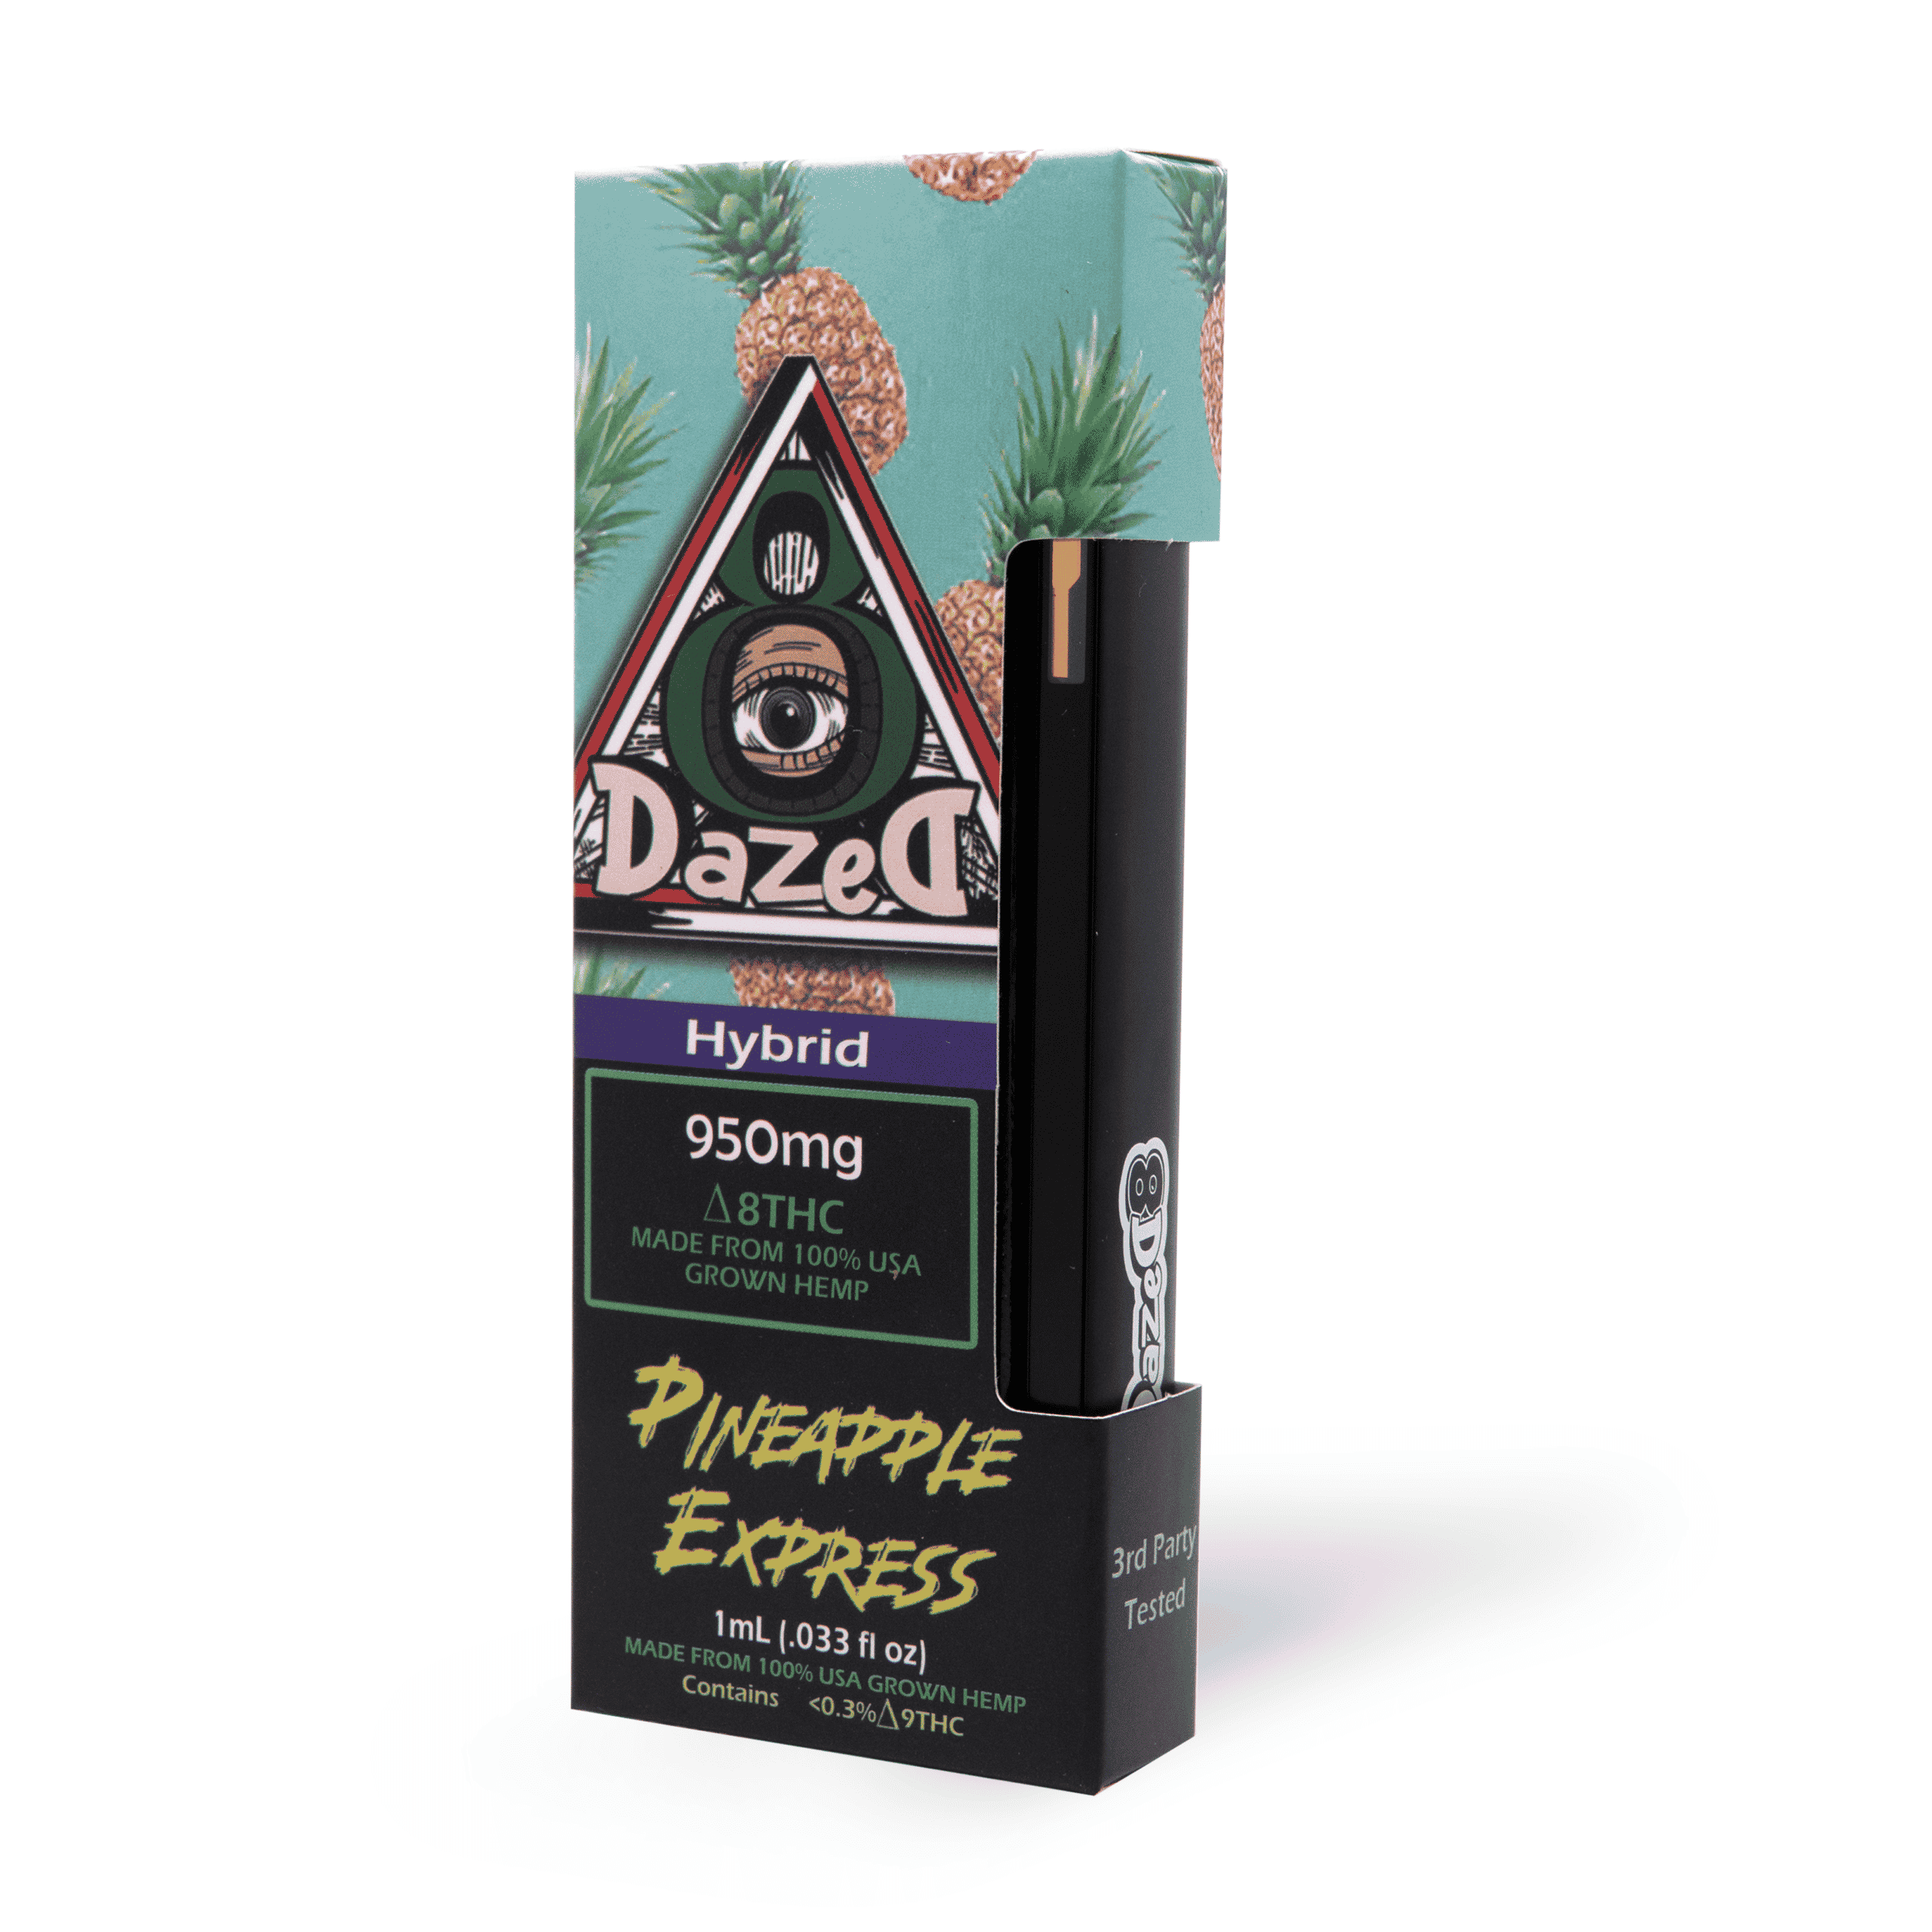 DazeD8 Pineapple Express Delta 8 Disposable (1g) Best Price